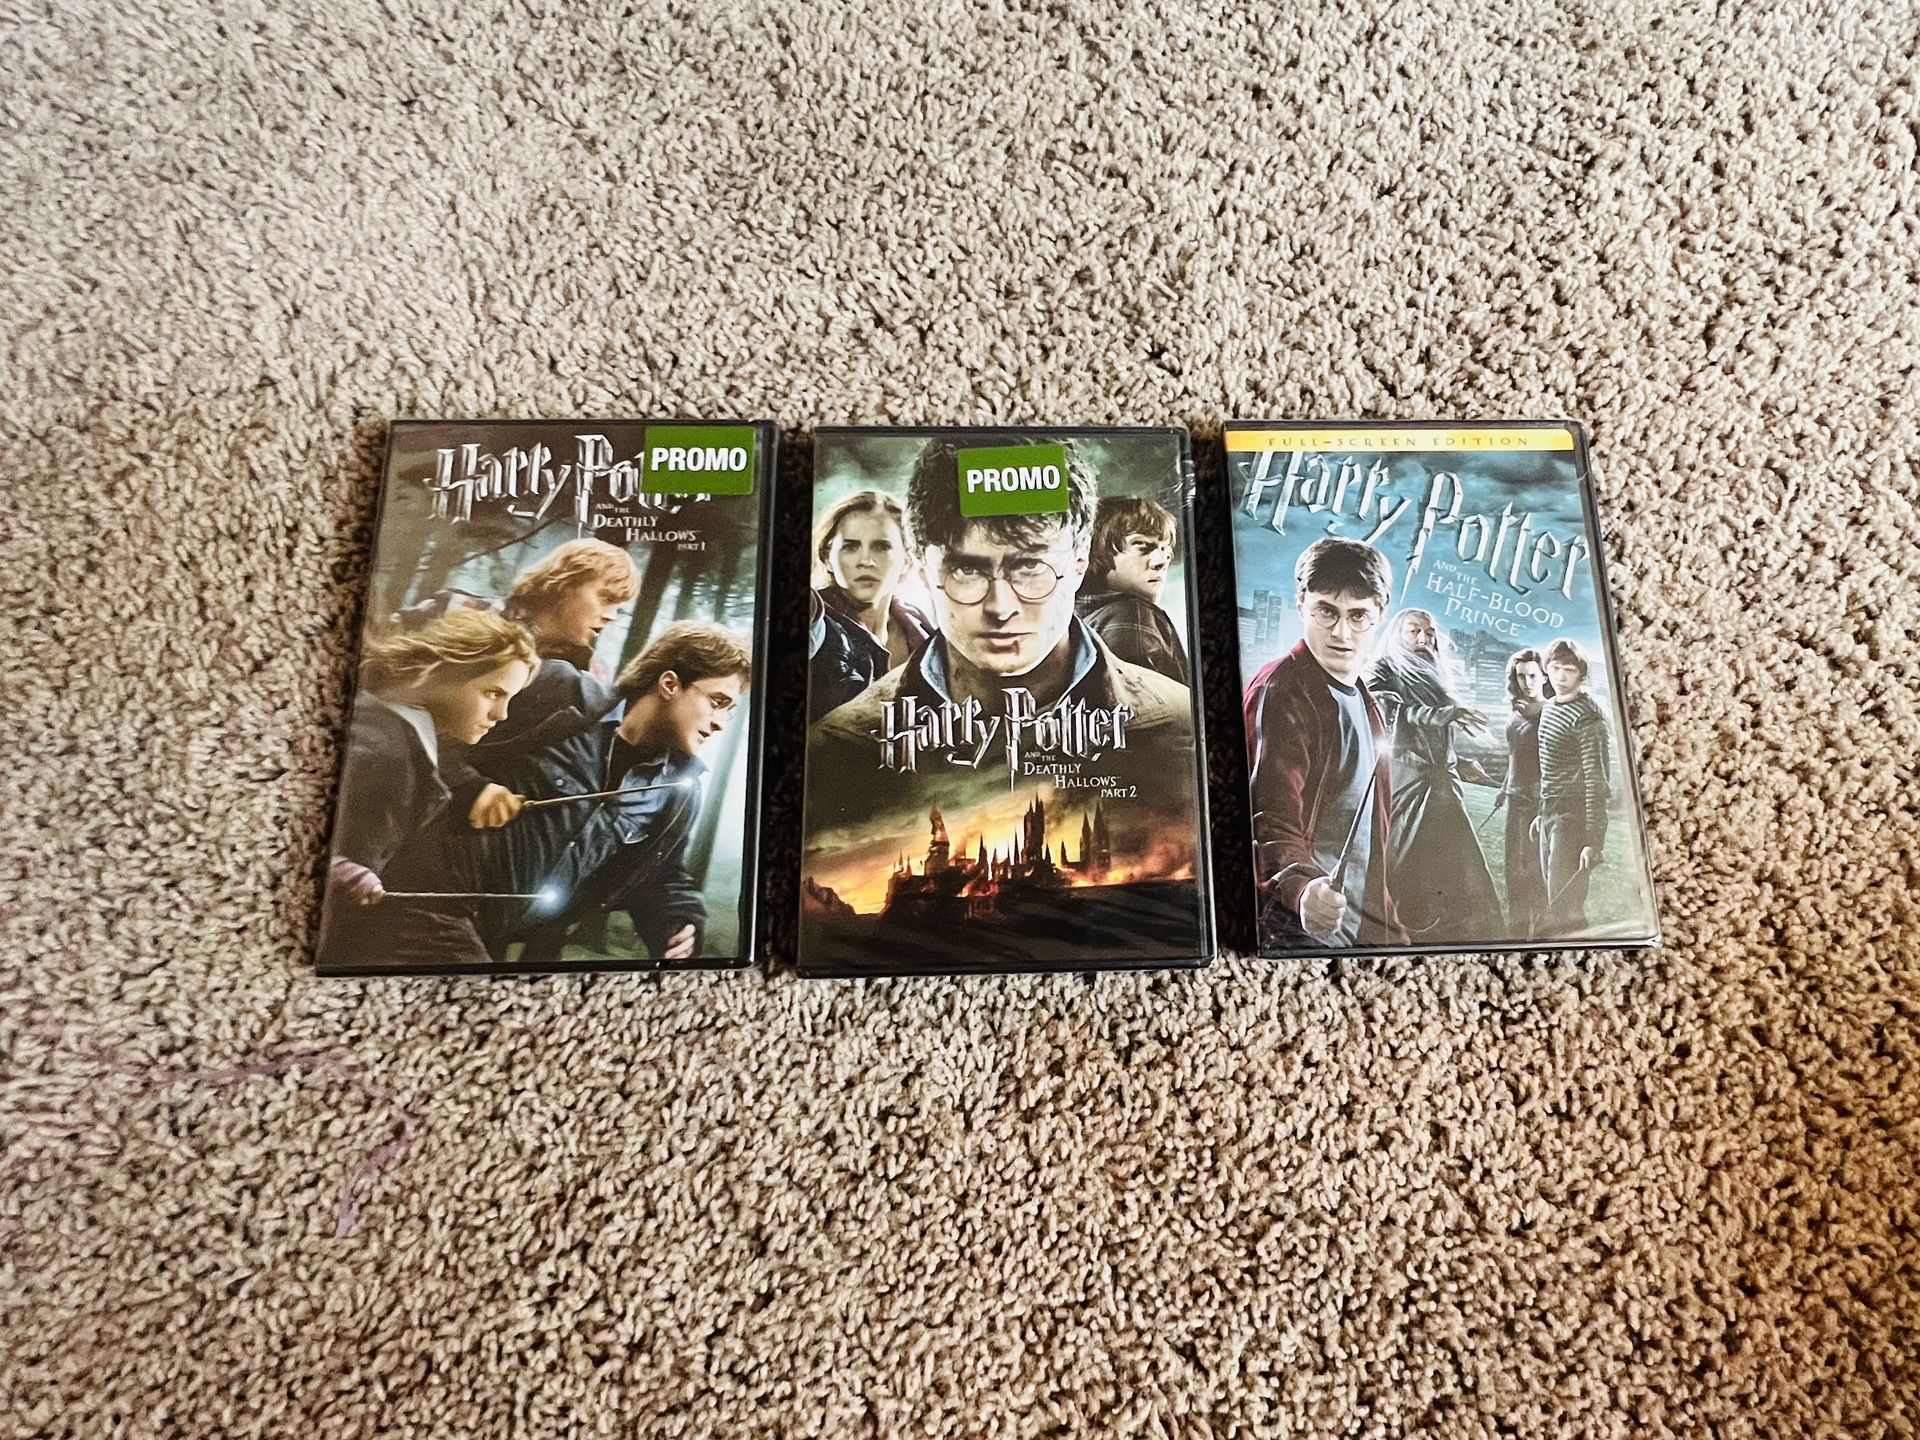 Harry Potter 3 DVD Lot - Brand New Sealed!! 